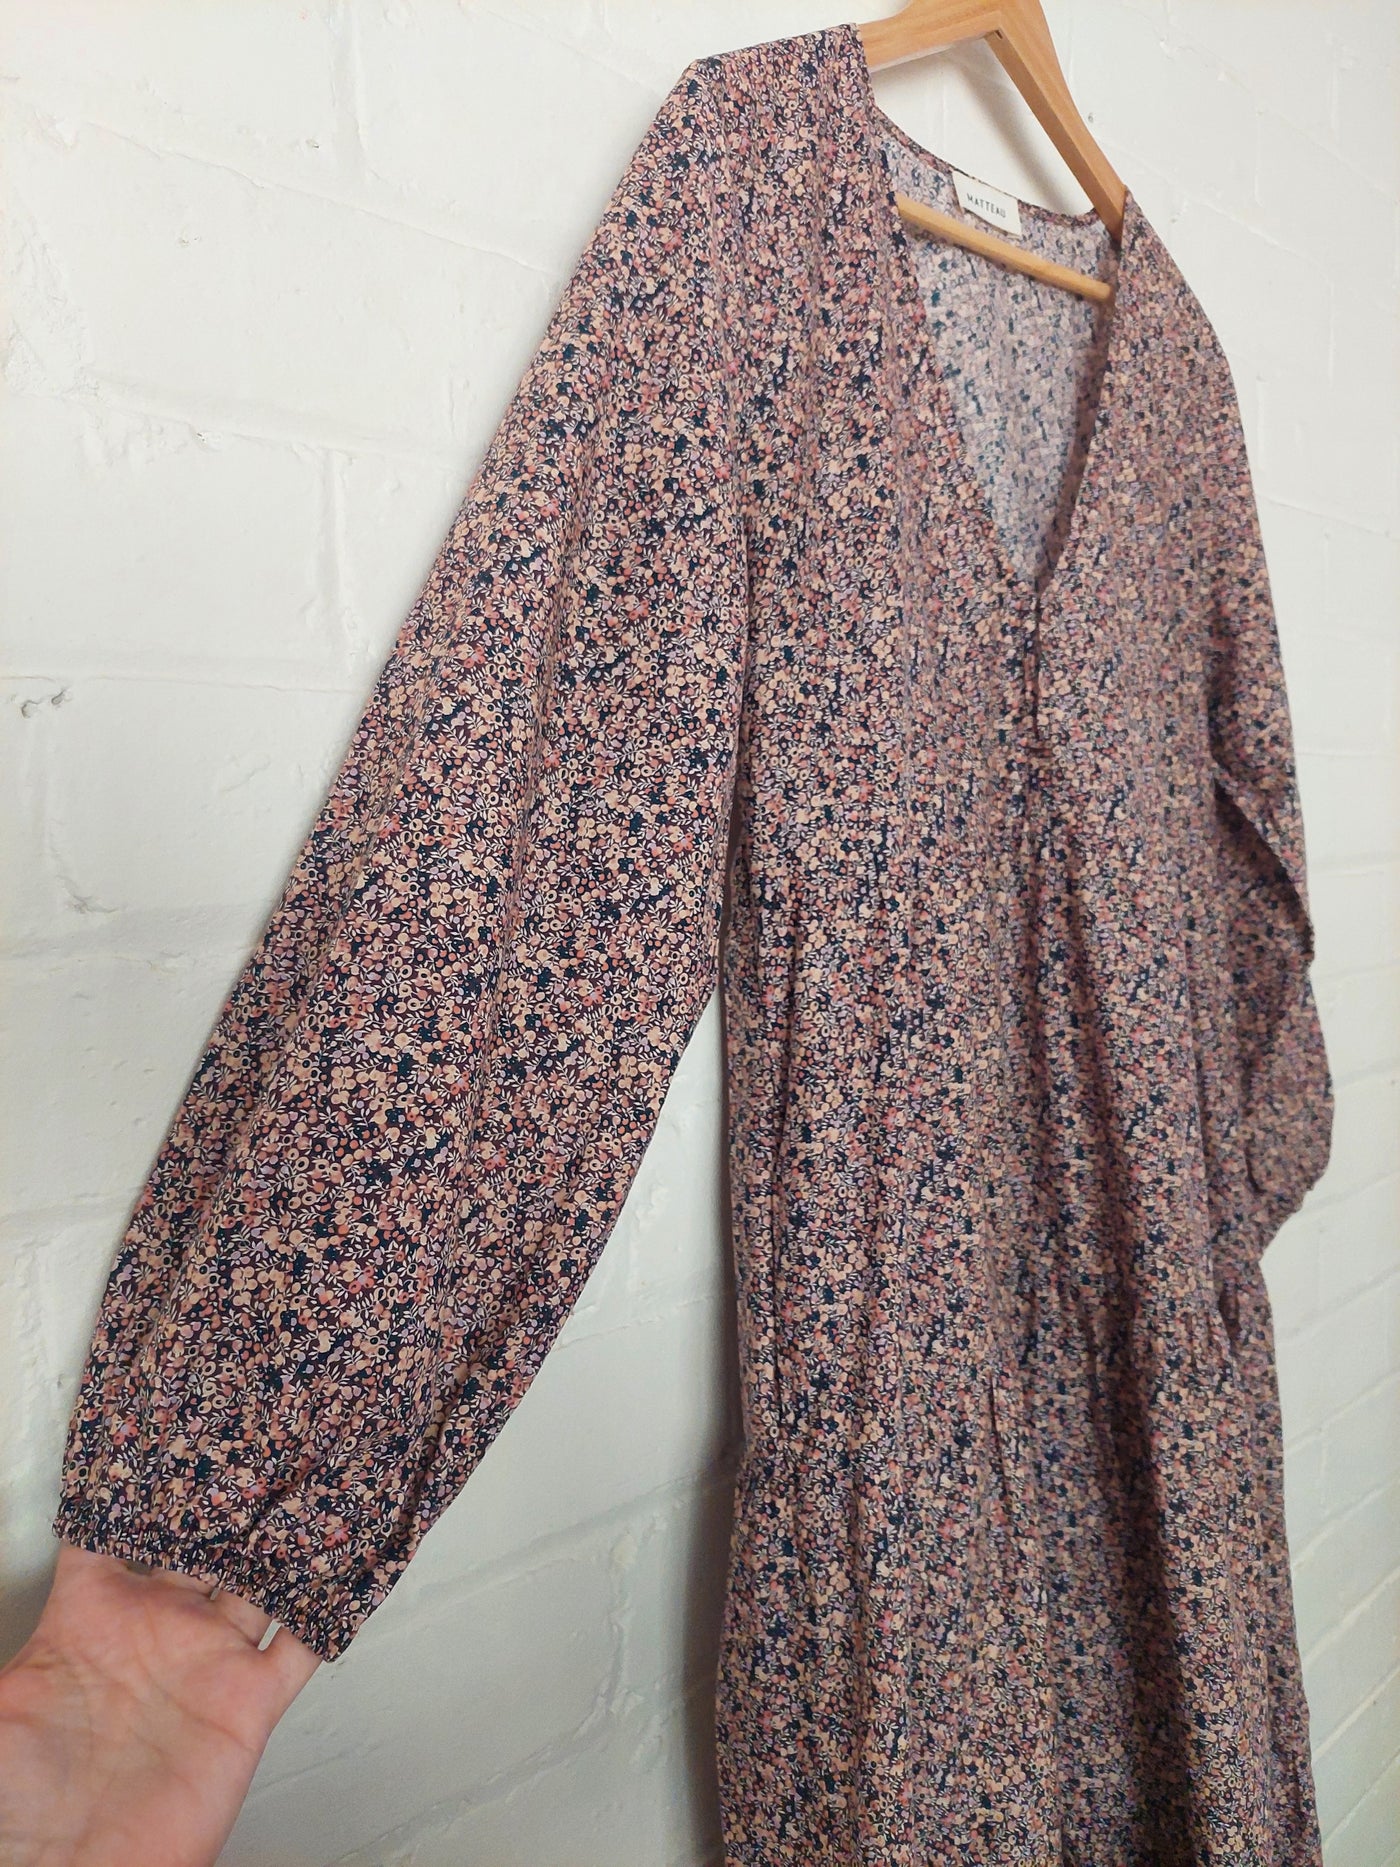 Matteau Long Sleeve Tiered Maxi Dress in Wild Primrose, Size 3 (AU 10 / US 6)